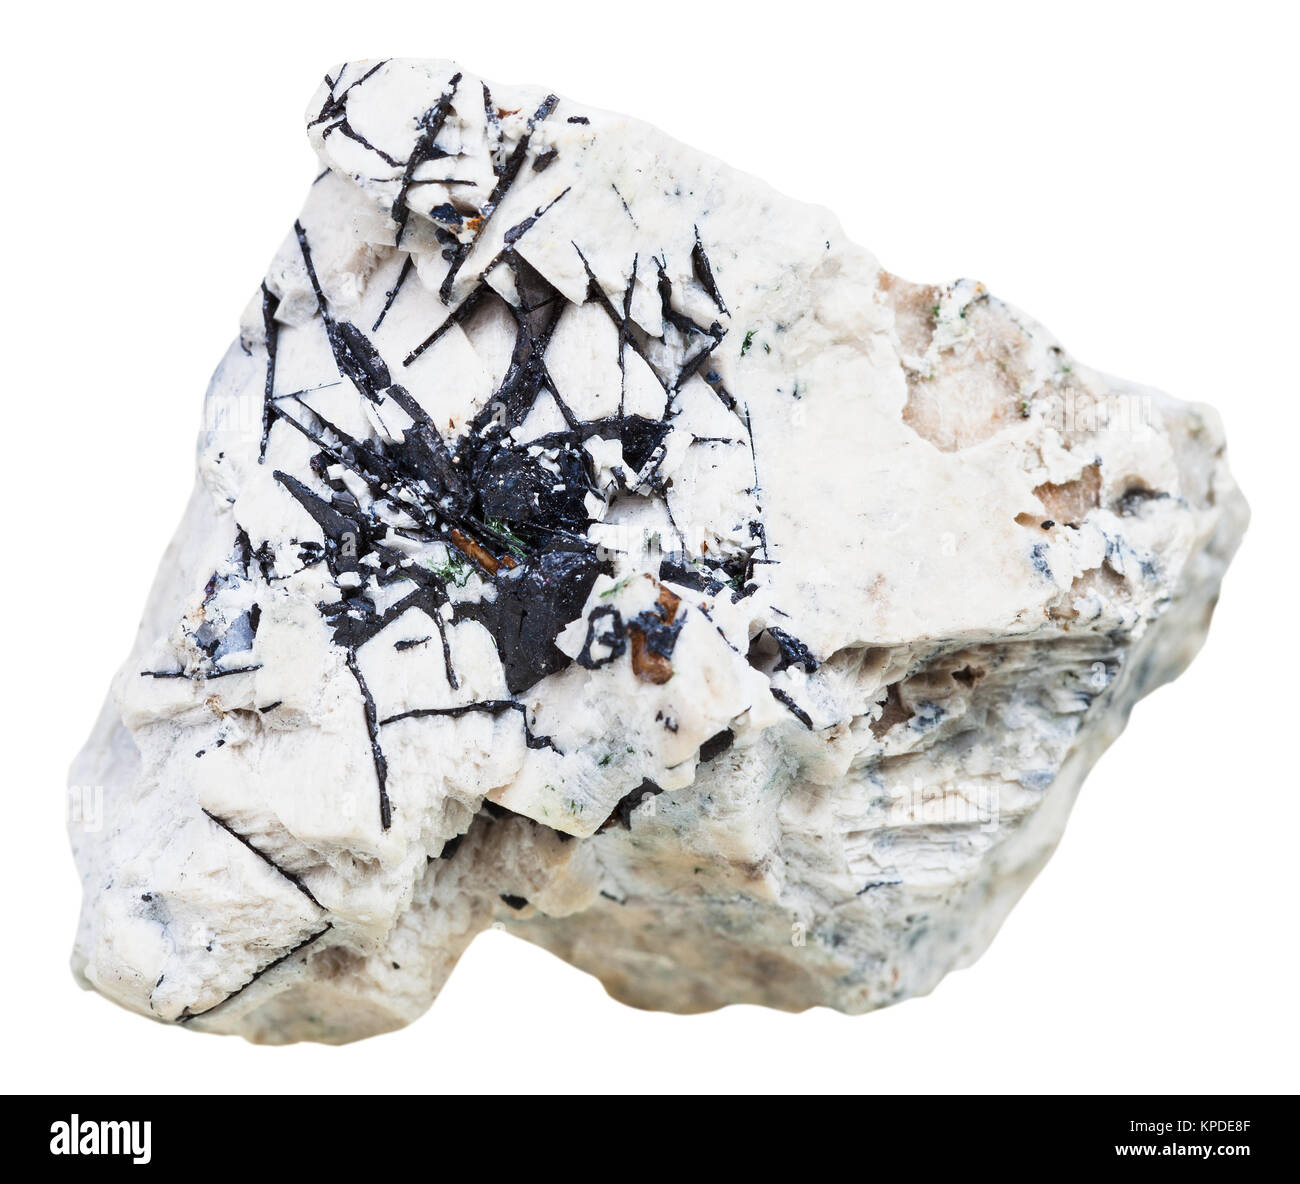 Ilmenite crystals at dolomite rock isolated Stock Photo